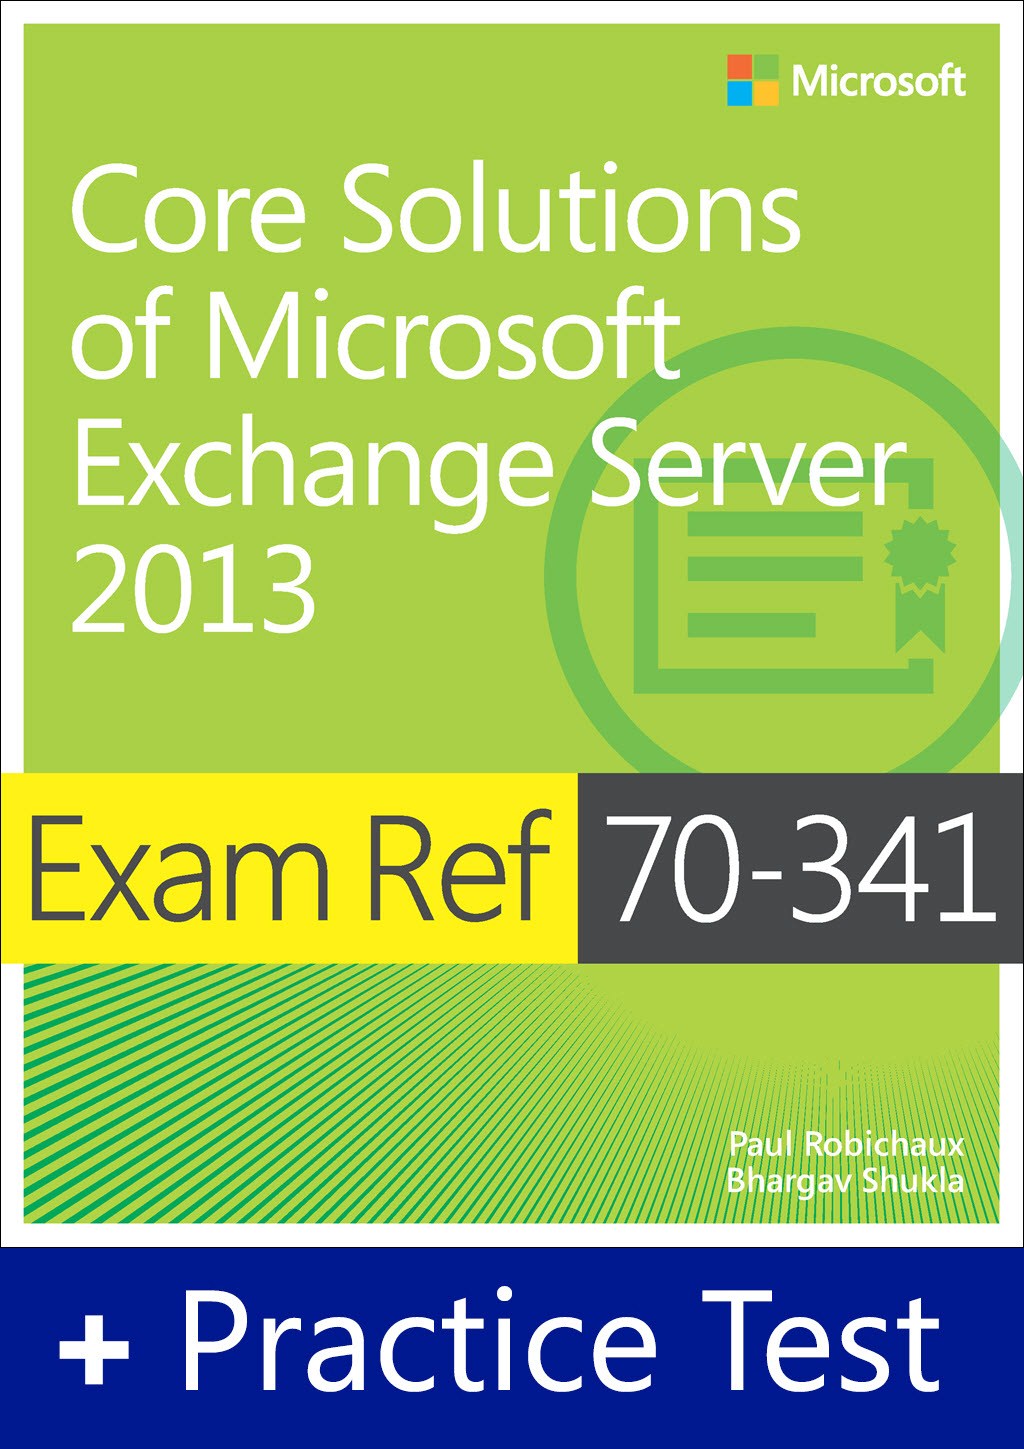 Exam Ref 70-341 Core Solutions of Microsoft Exchange Server 2013 with Practice Test